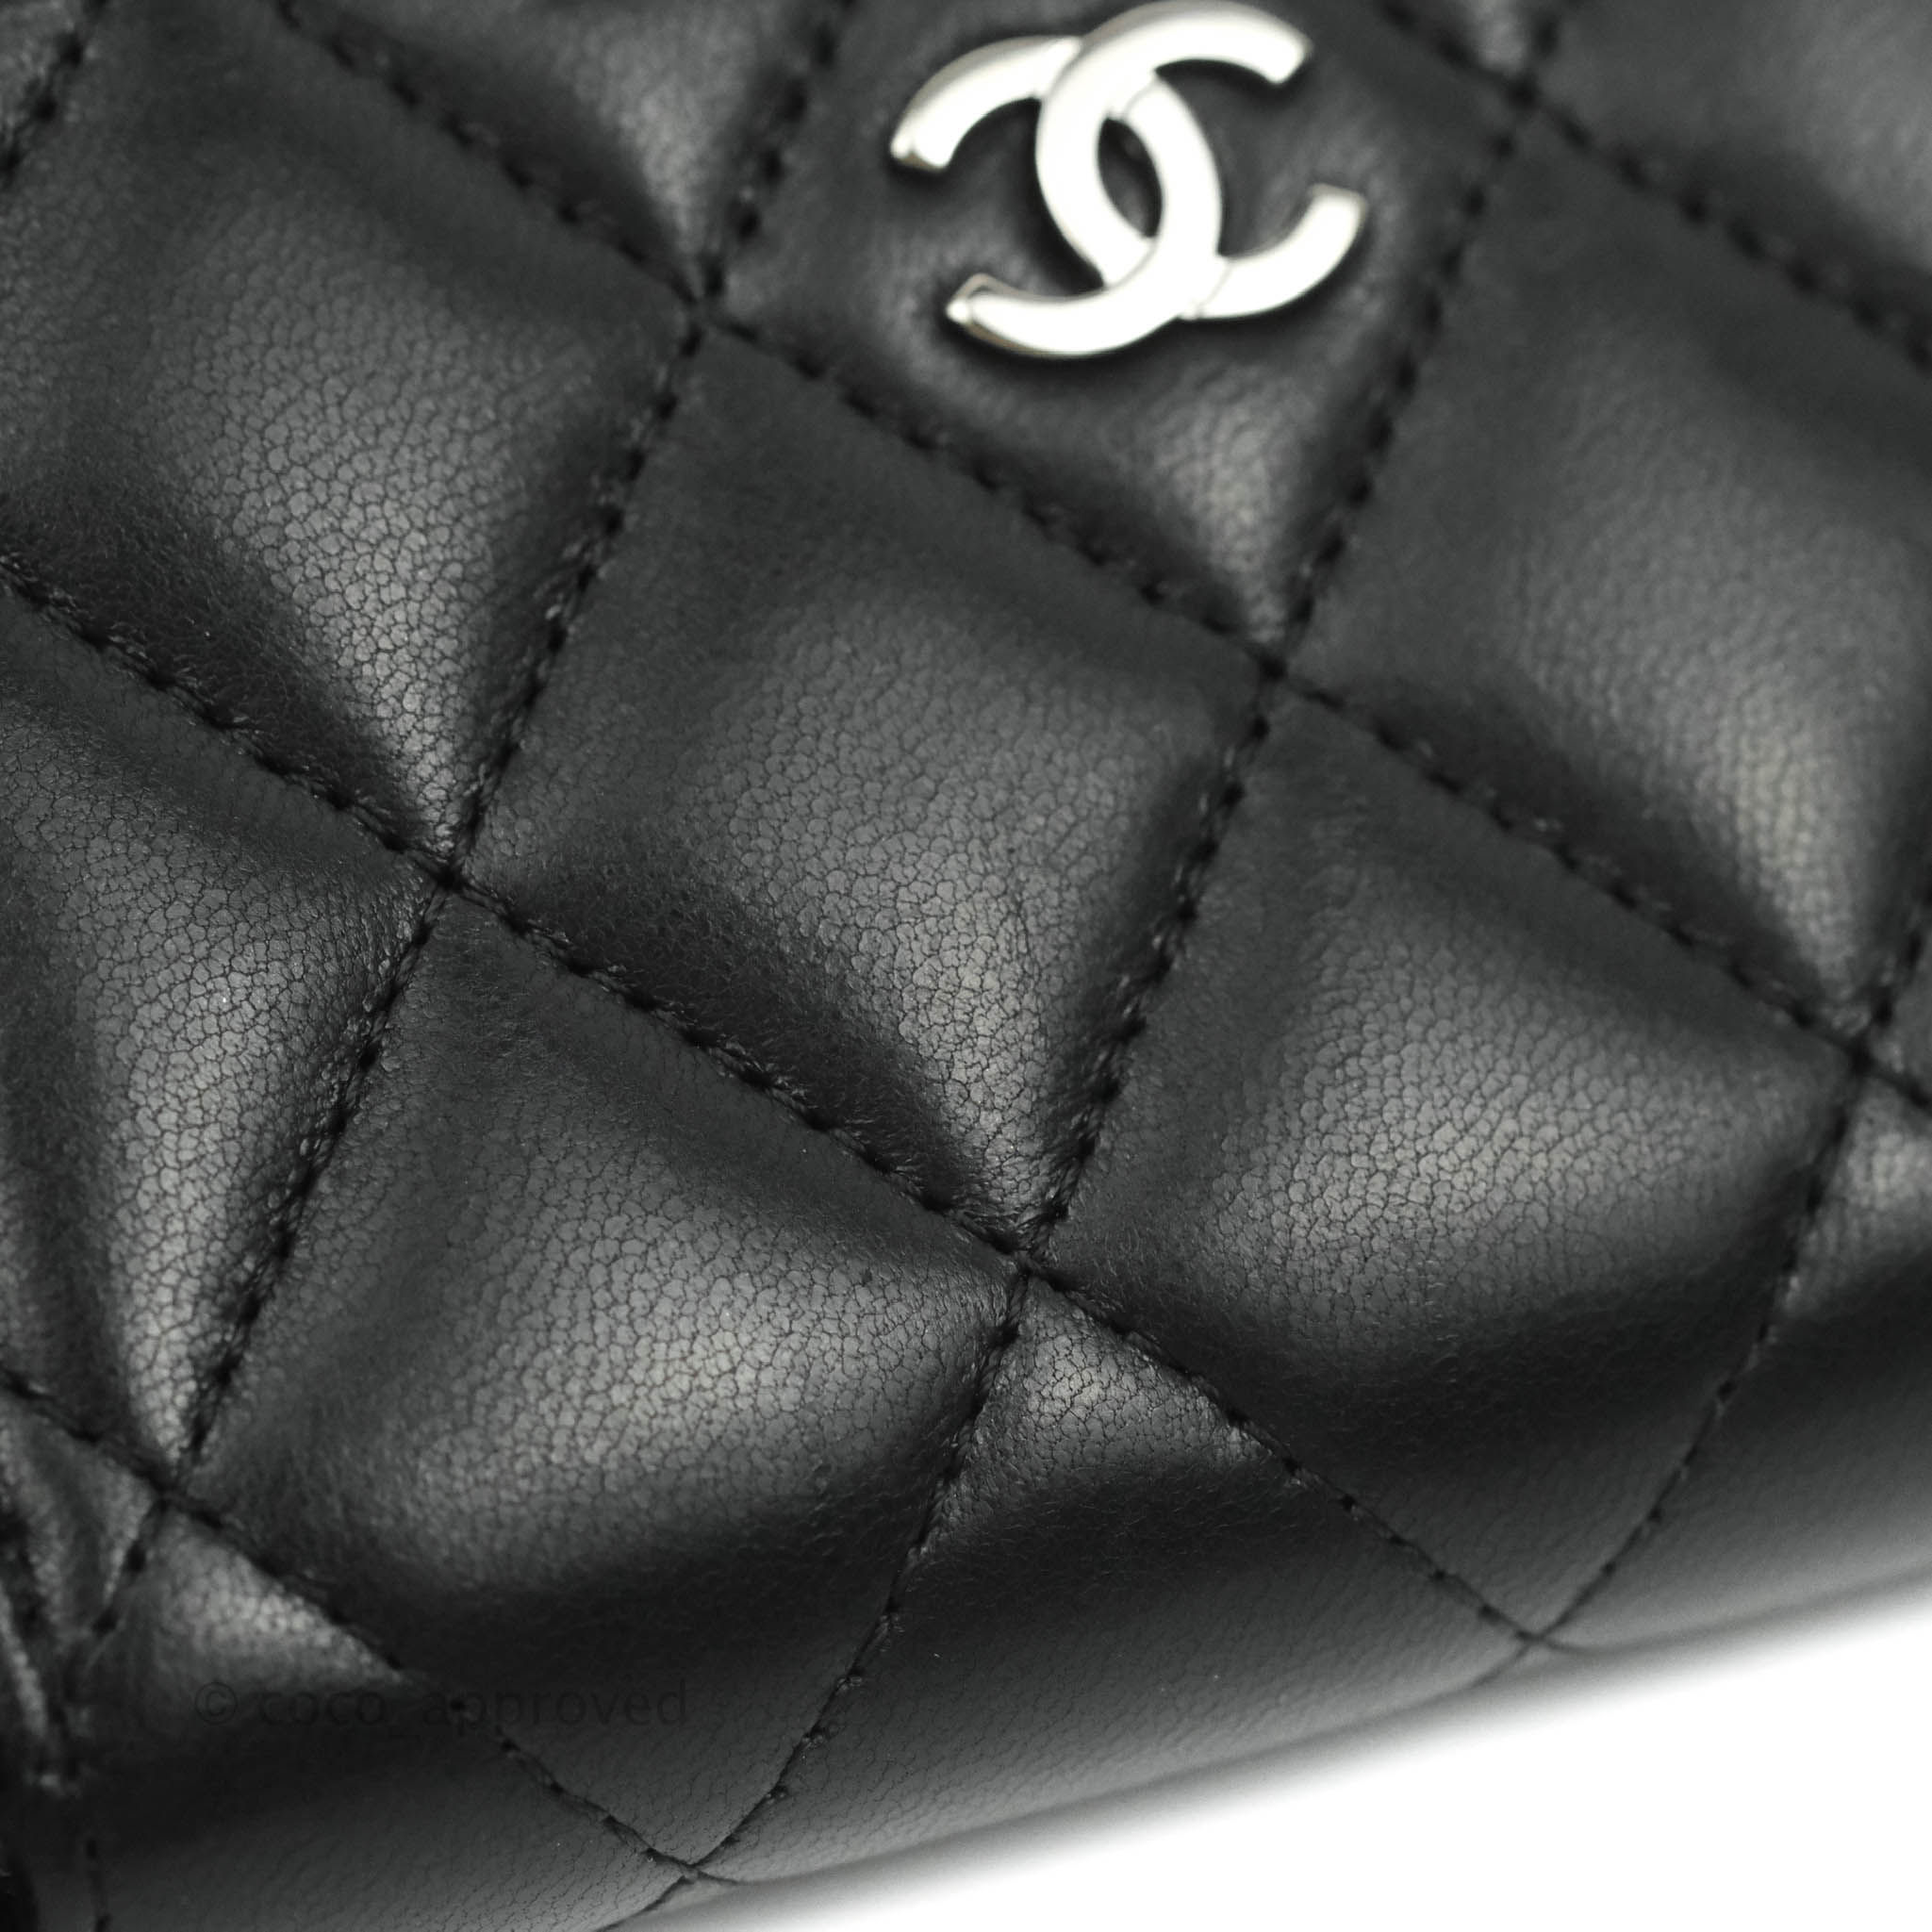 Chanel Classic Zipped Coin Purse Black Lambskin Silver Hardware